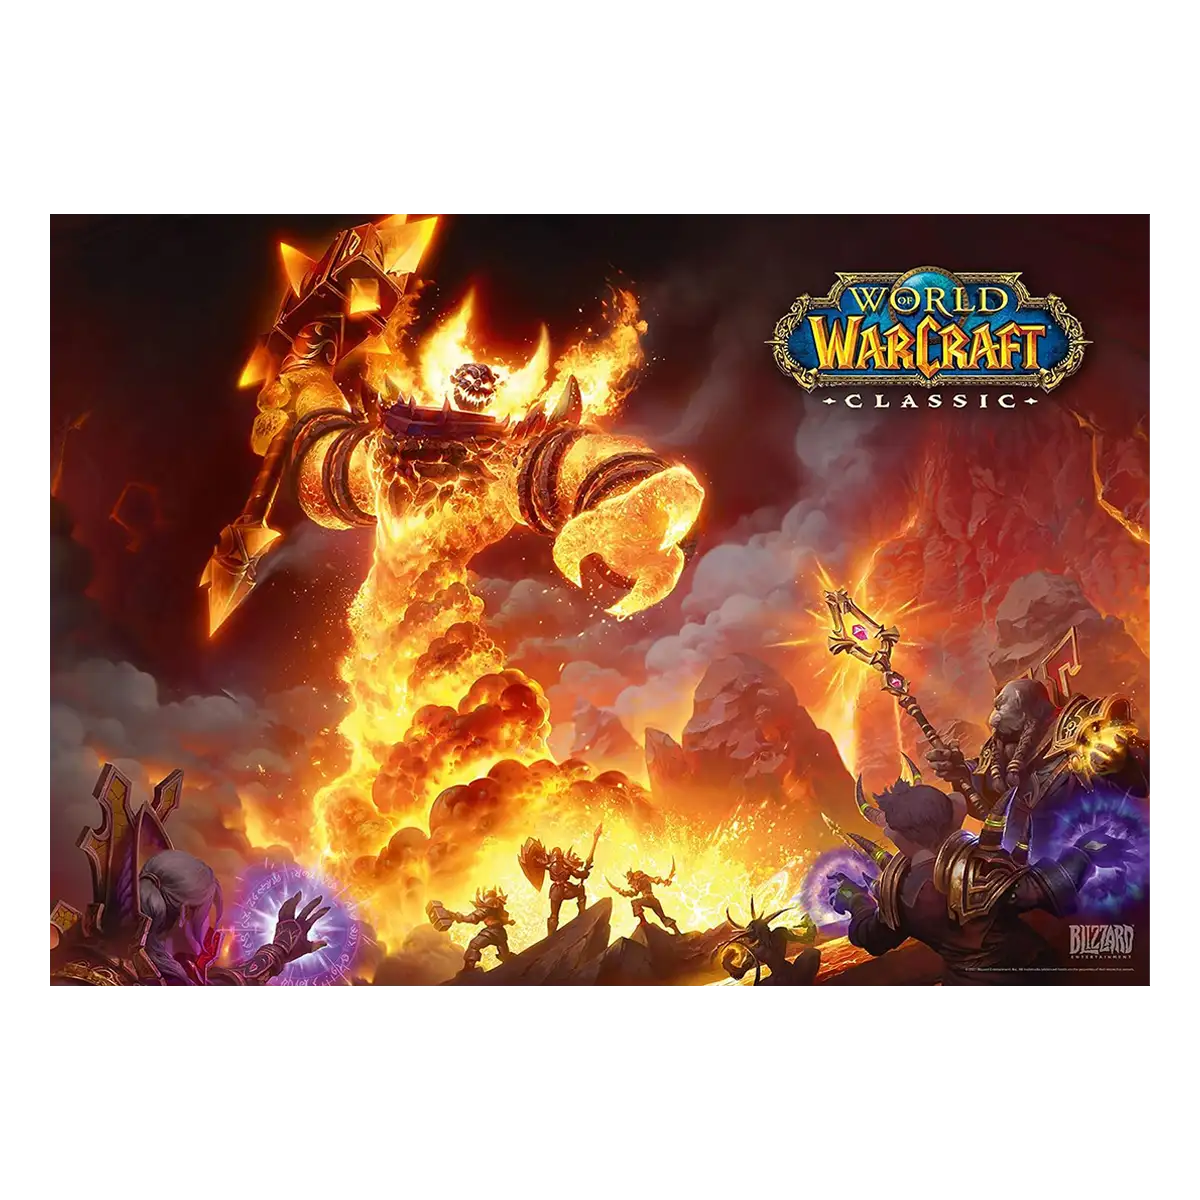 World of Warcraft: Classic Puzzle "Ragnaros" (1000 pcs) Image 2